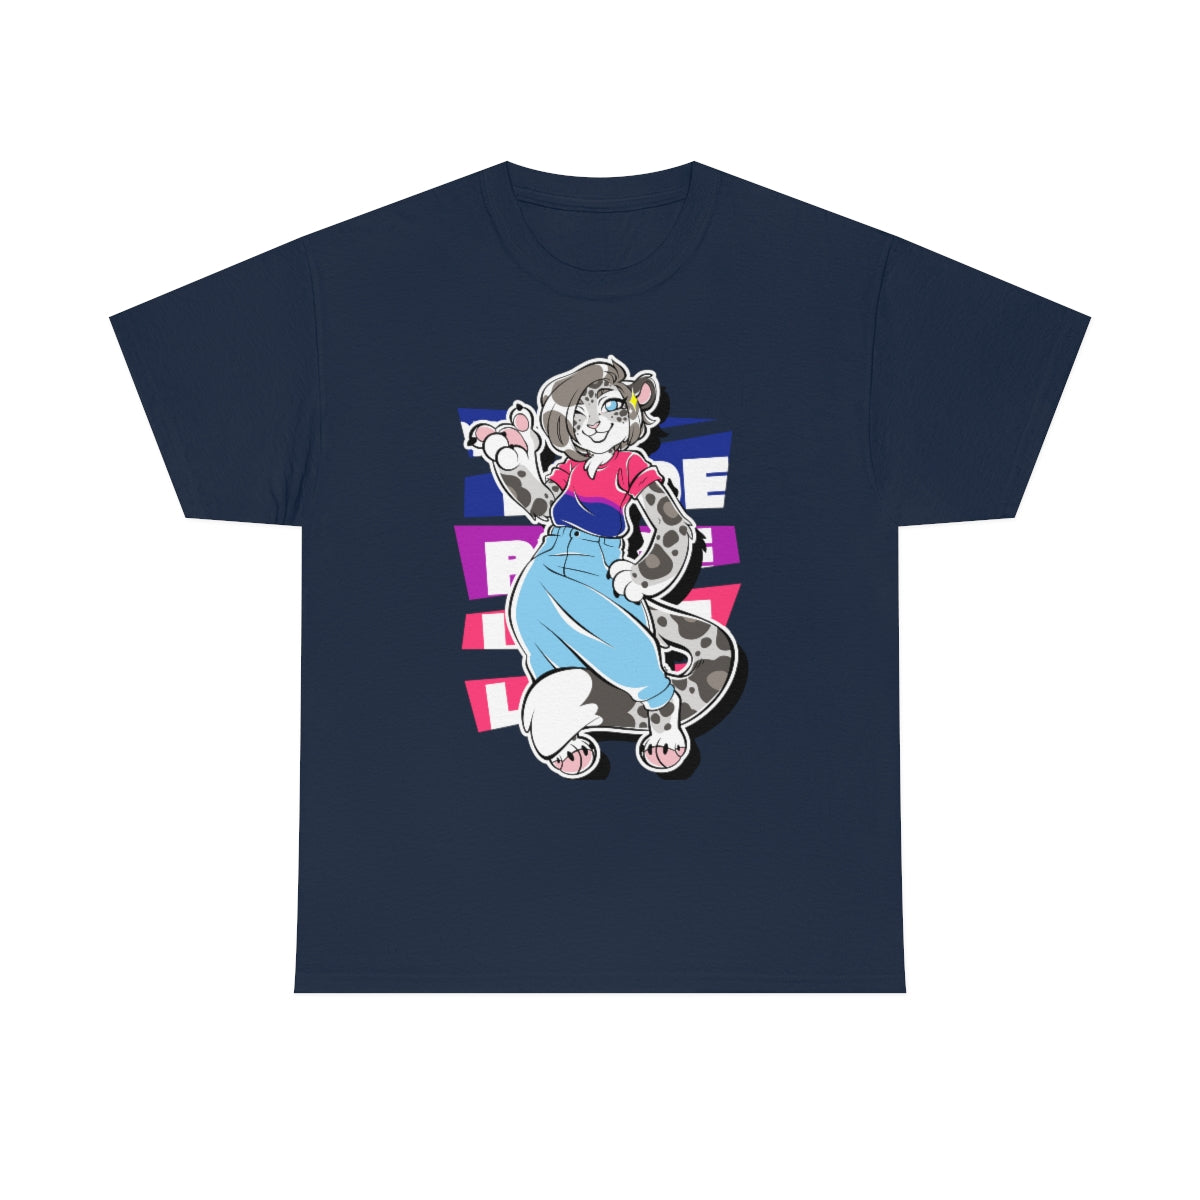 Bisexual Pride Mandy Snow Leopard - T-Shirt T-Shirt Artworktee Navy Blue S 